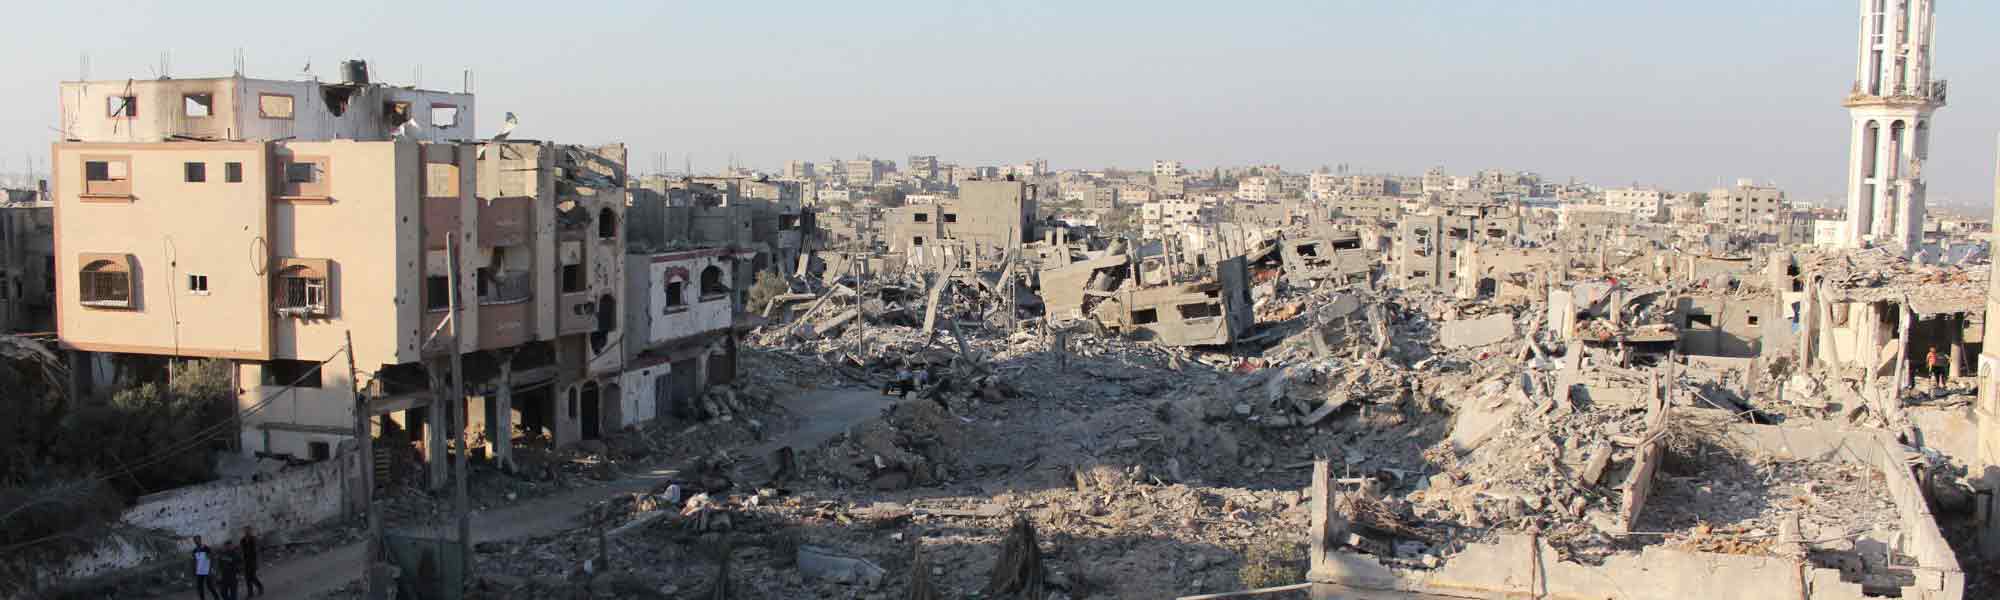 Ruiner i Gaza.